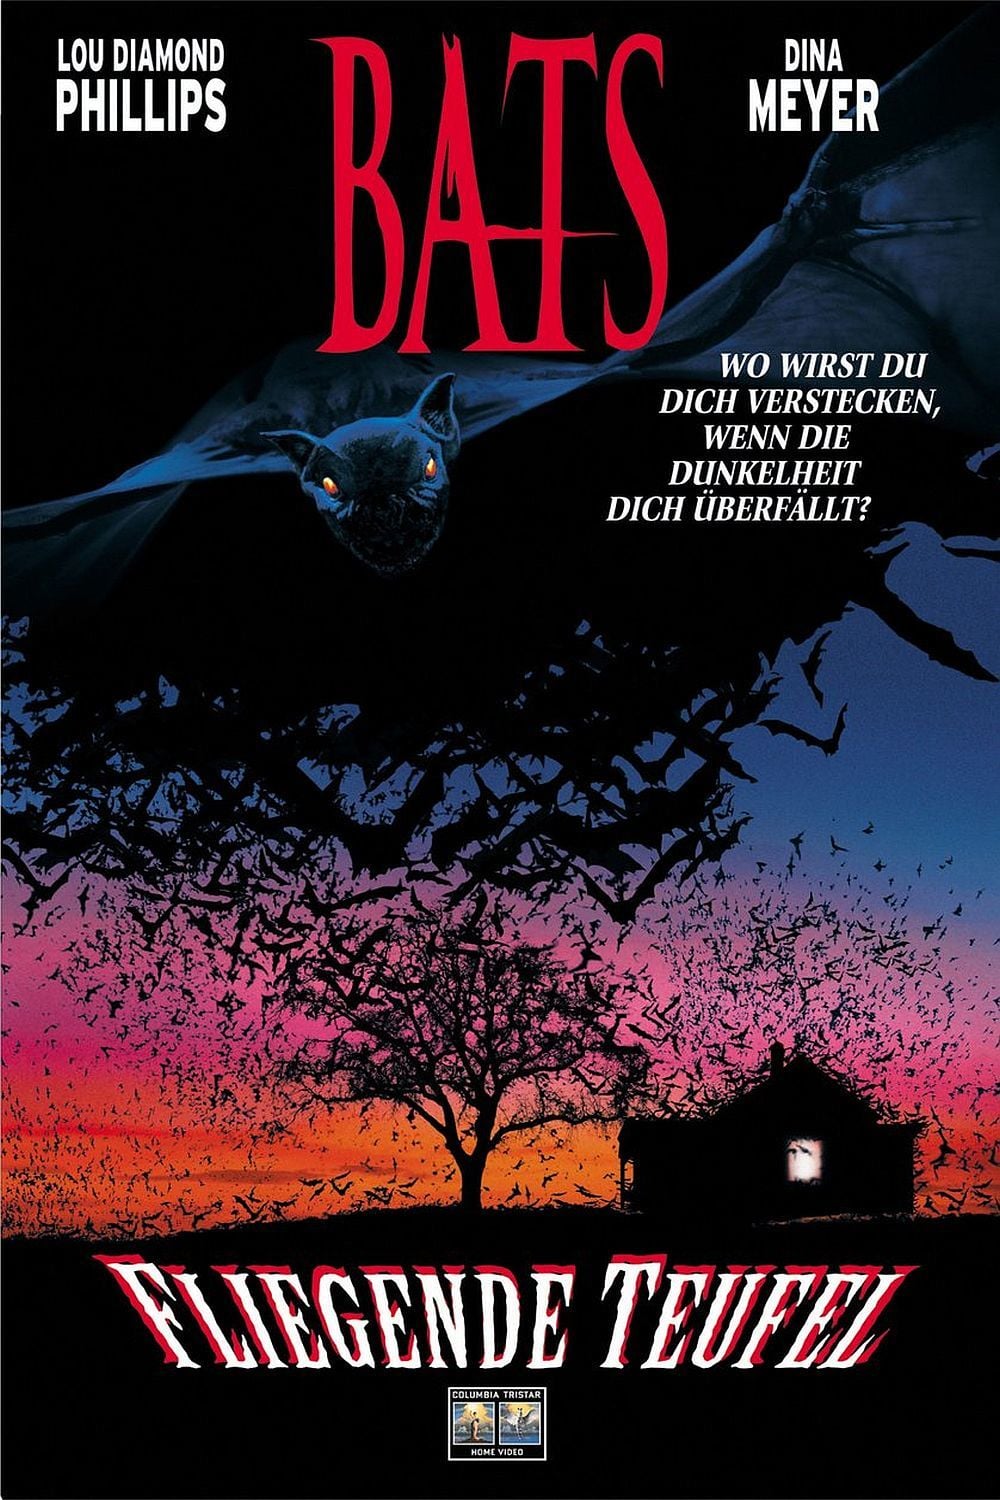 Plakat von "Bats - Fliegende Teufel"